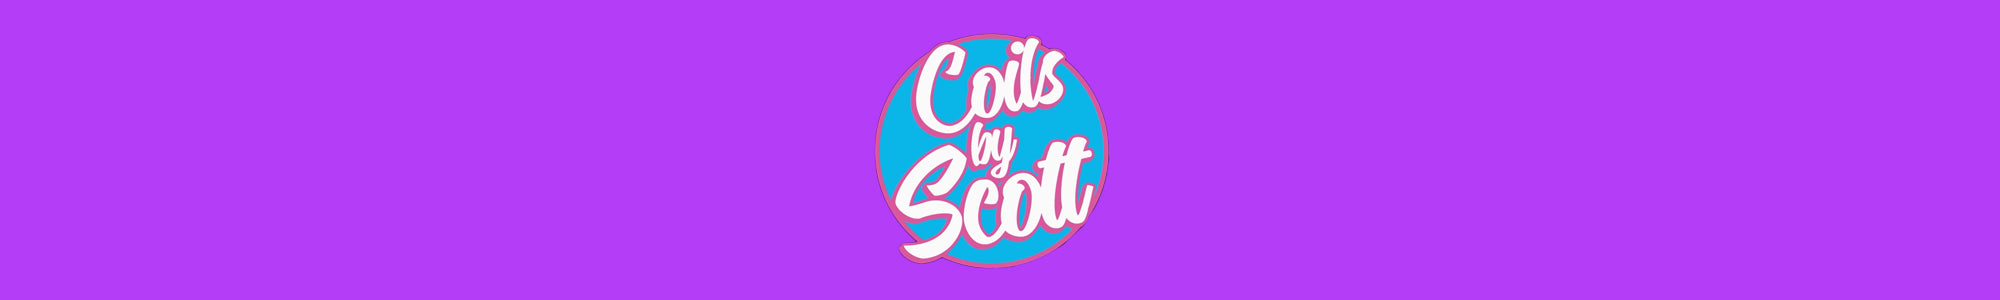 coils by scott handmade coils uk